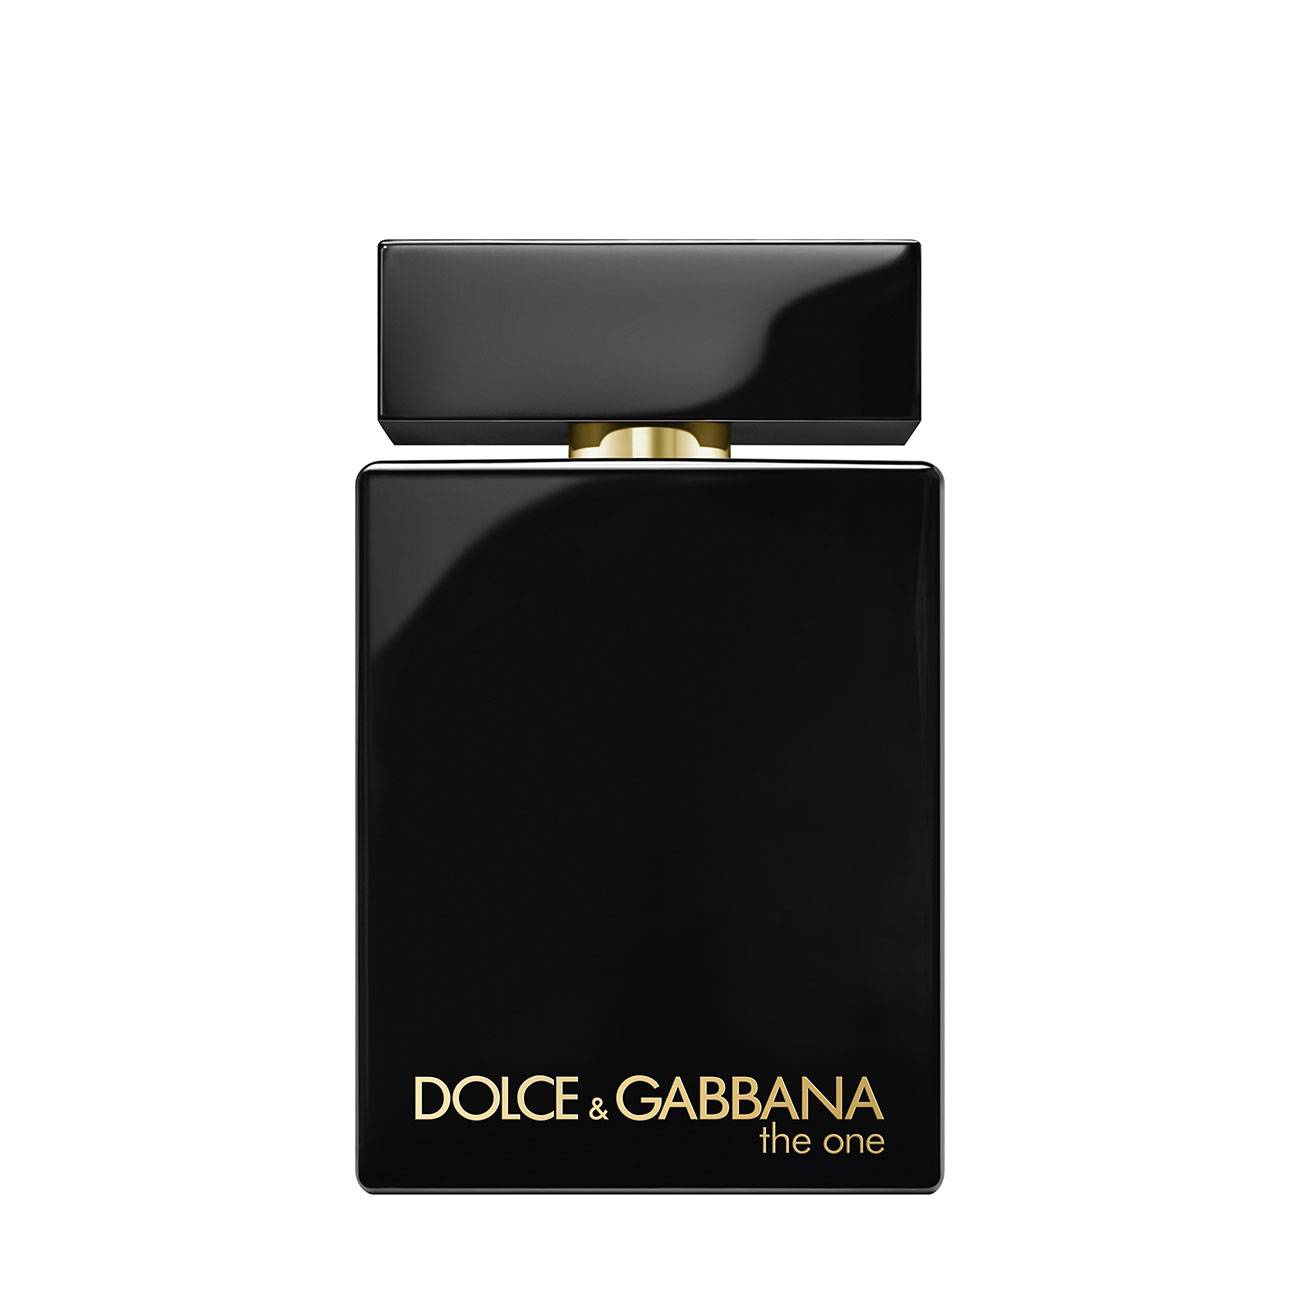 The One For Men Intense 100ml Dolce & Gabbana imagine 2021 bestvalue.eu